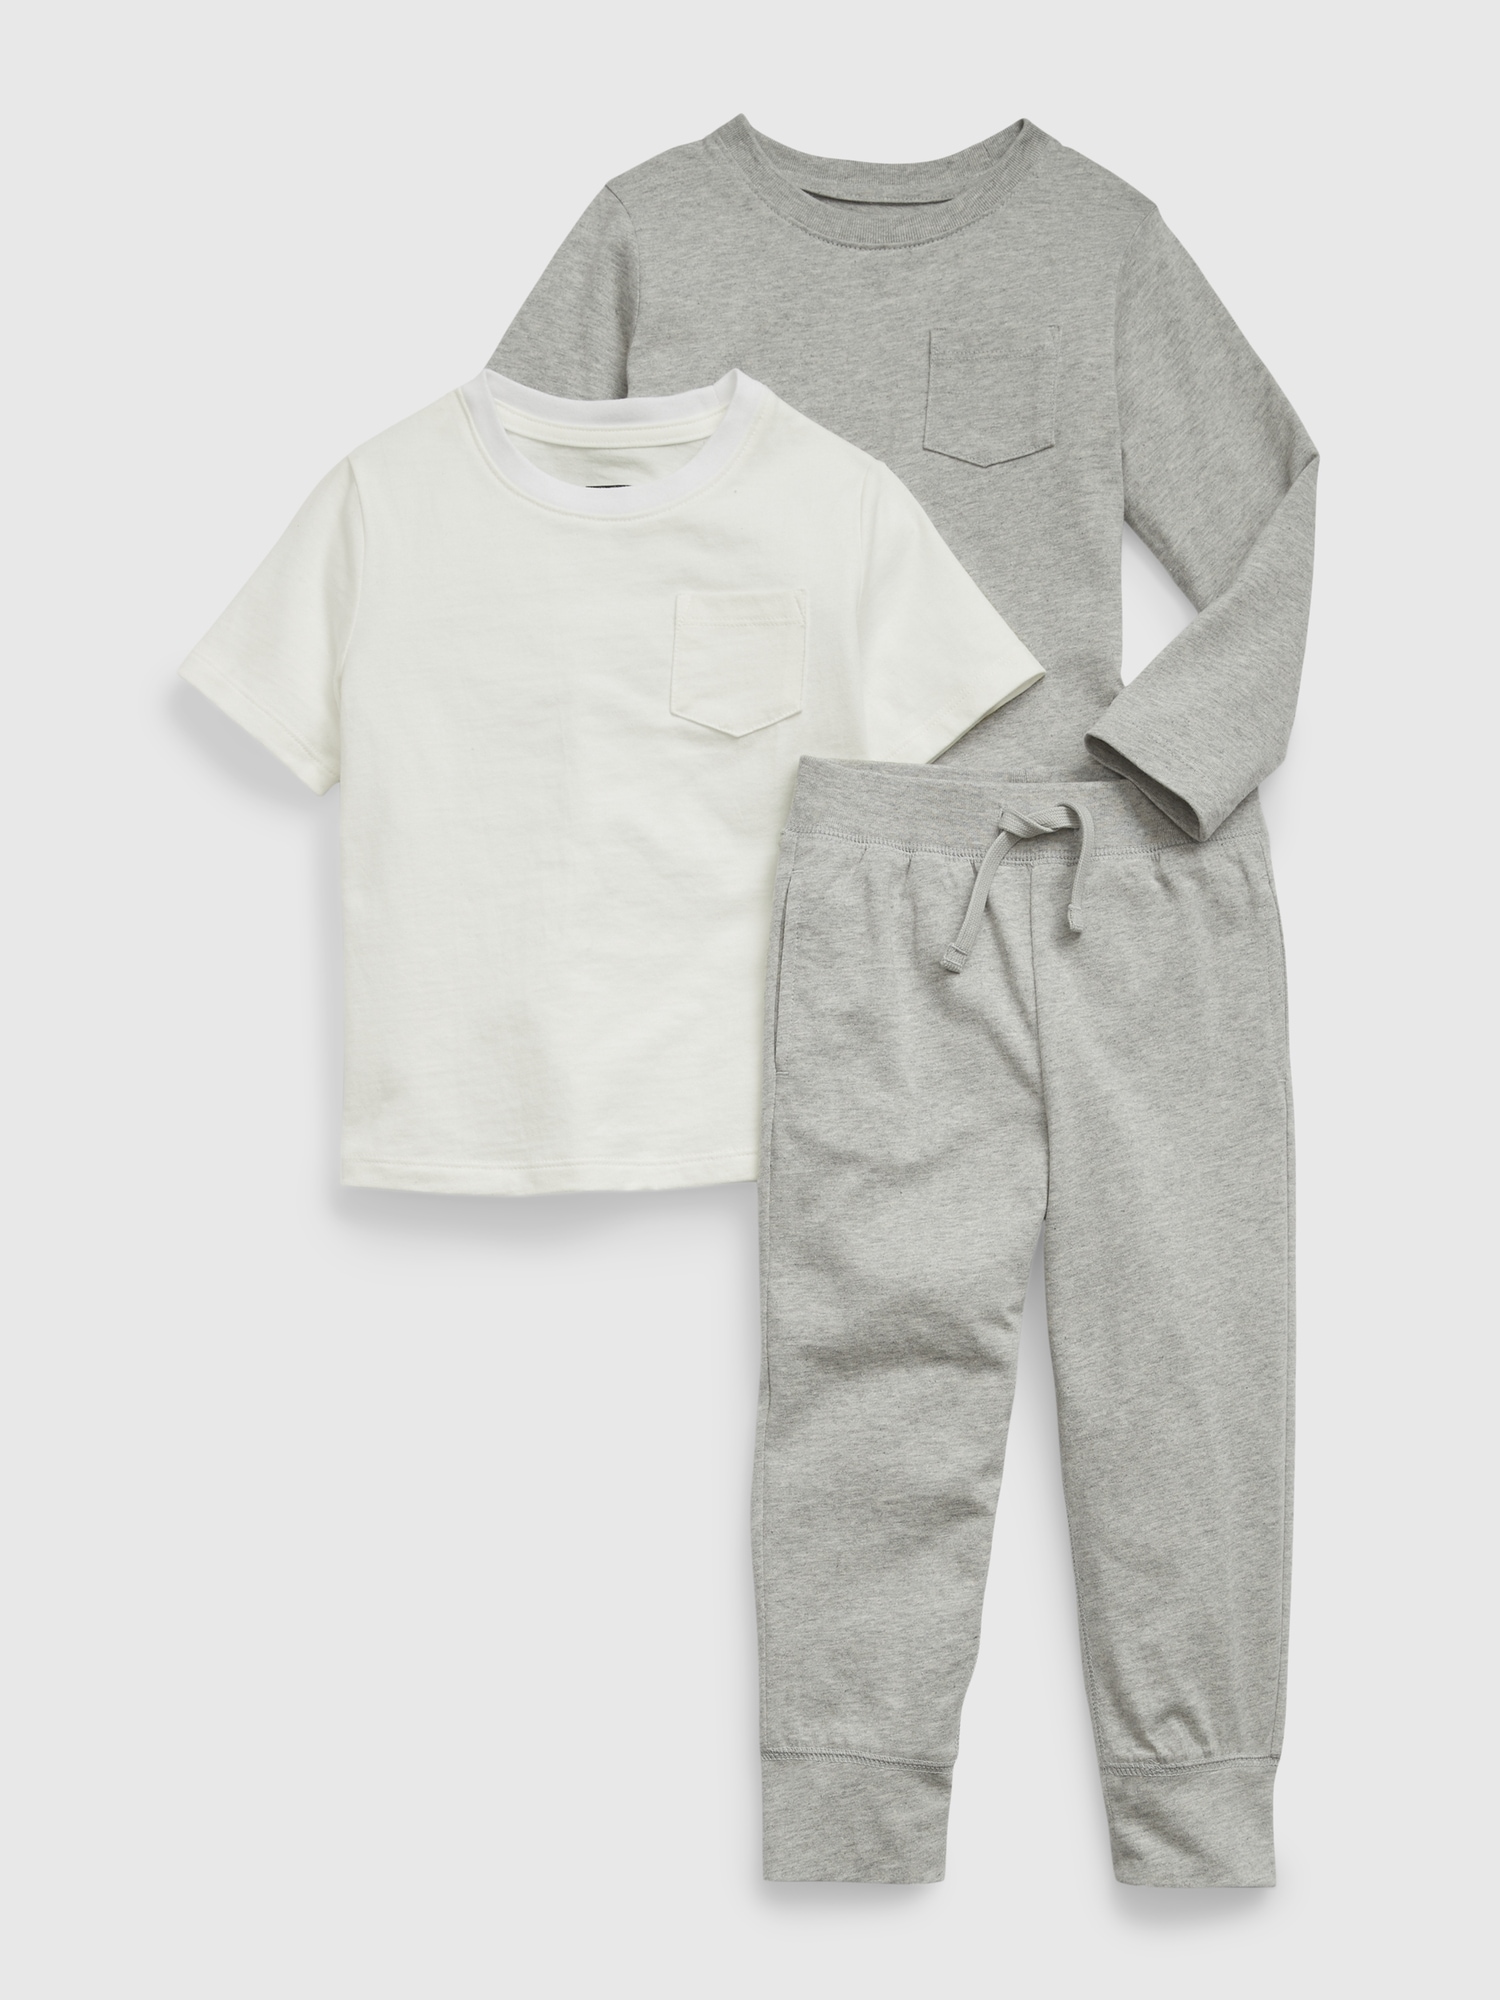 Gap Toddler Organic Cotton Mix and Match Outfit Set